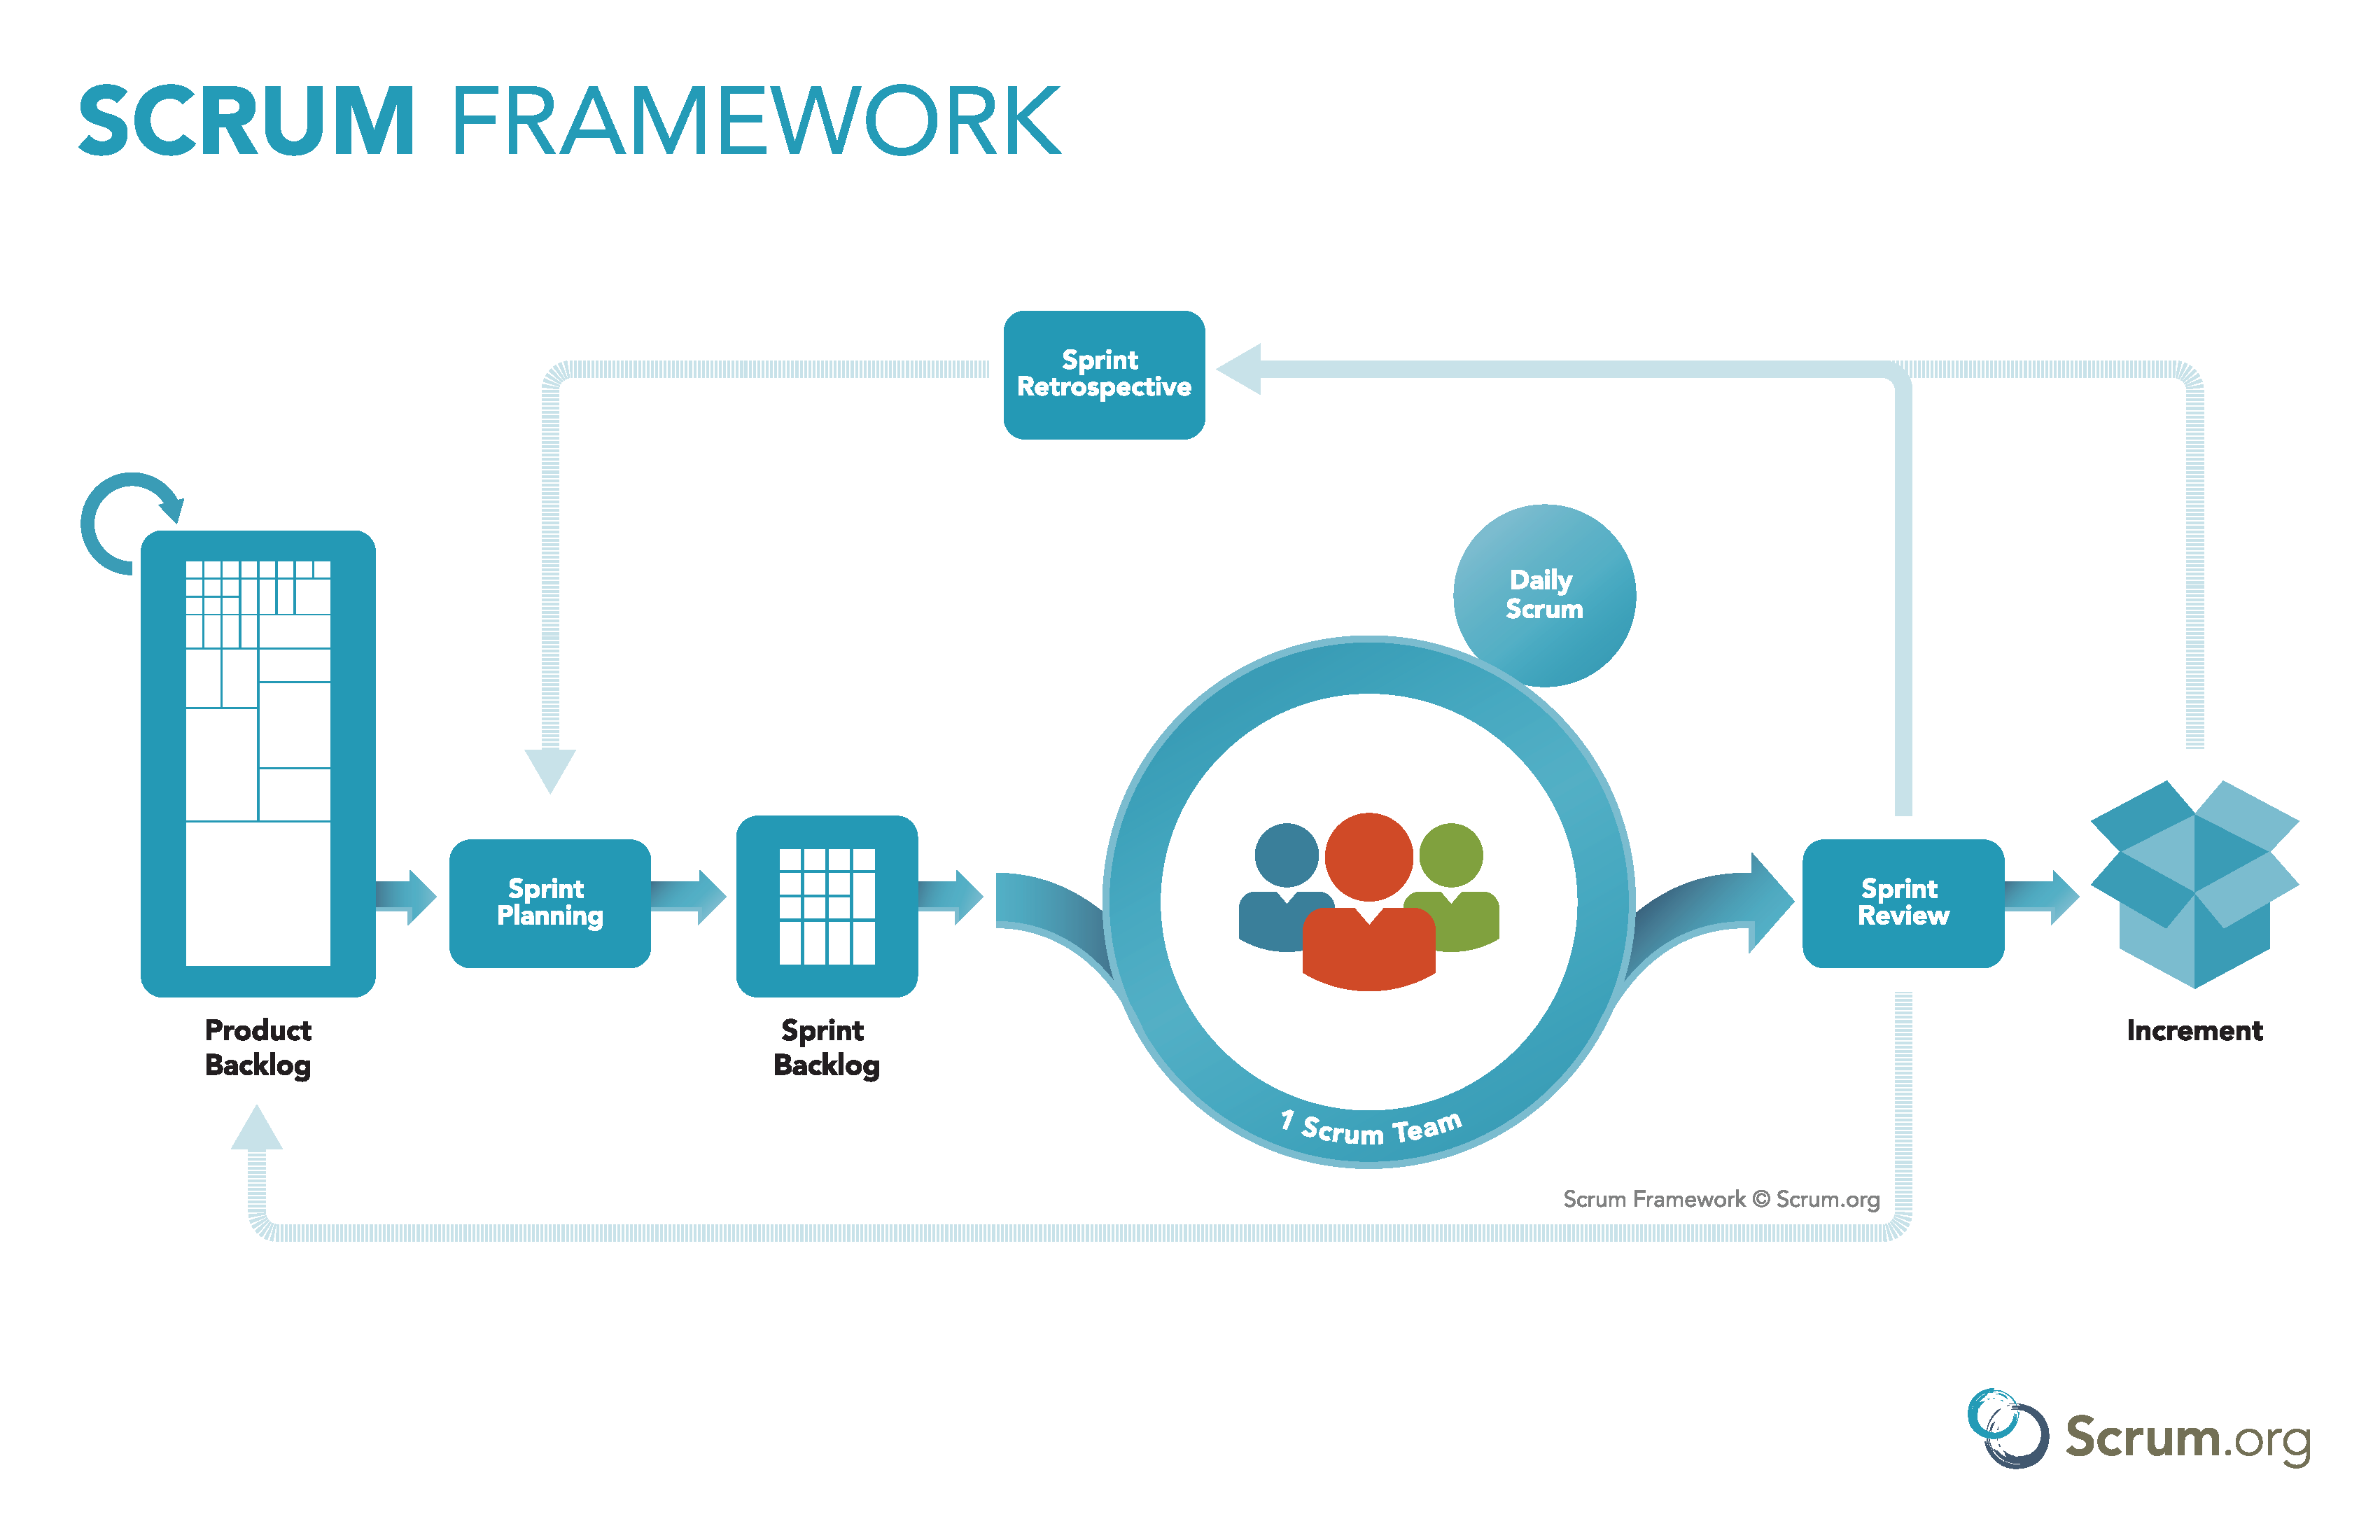 Scrum Framework